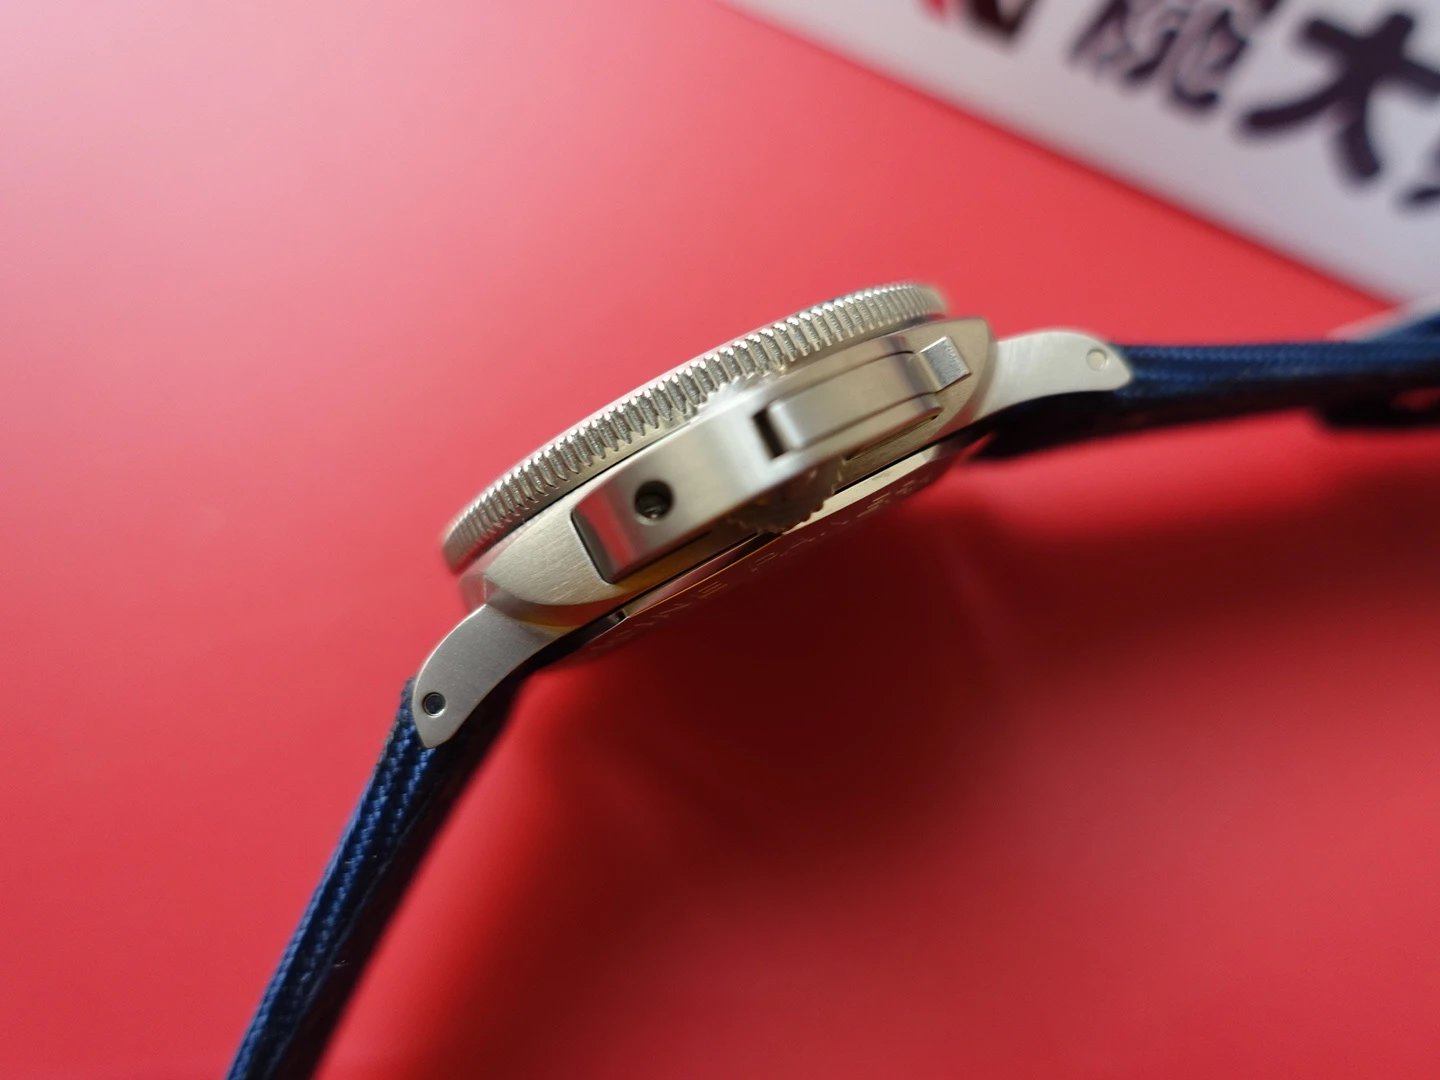 VS新款发售：PAM985-47mm，沛纳海2019倾心之作：内悬浮logo，立体数字圈口，三明治表盘男士机械手表